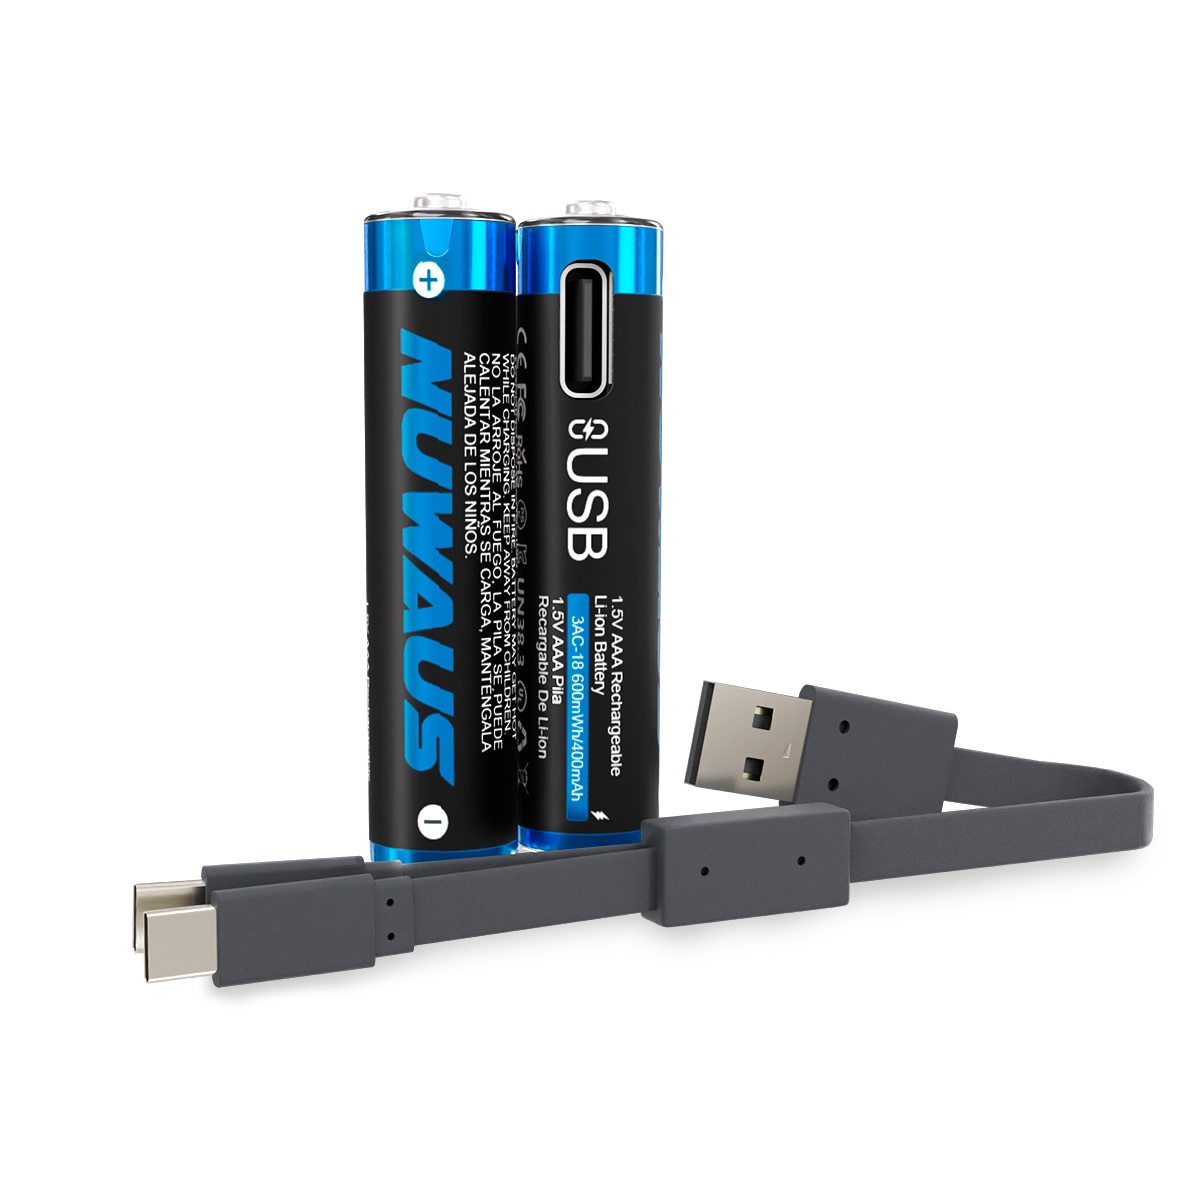 Pilas recargables Nuwaus AAA x4 unidades entrada USB-C